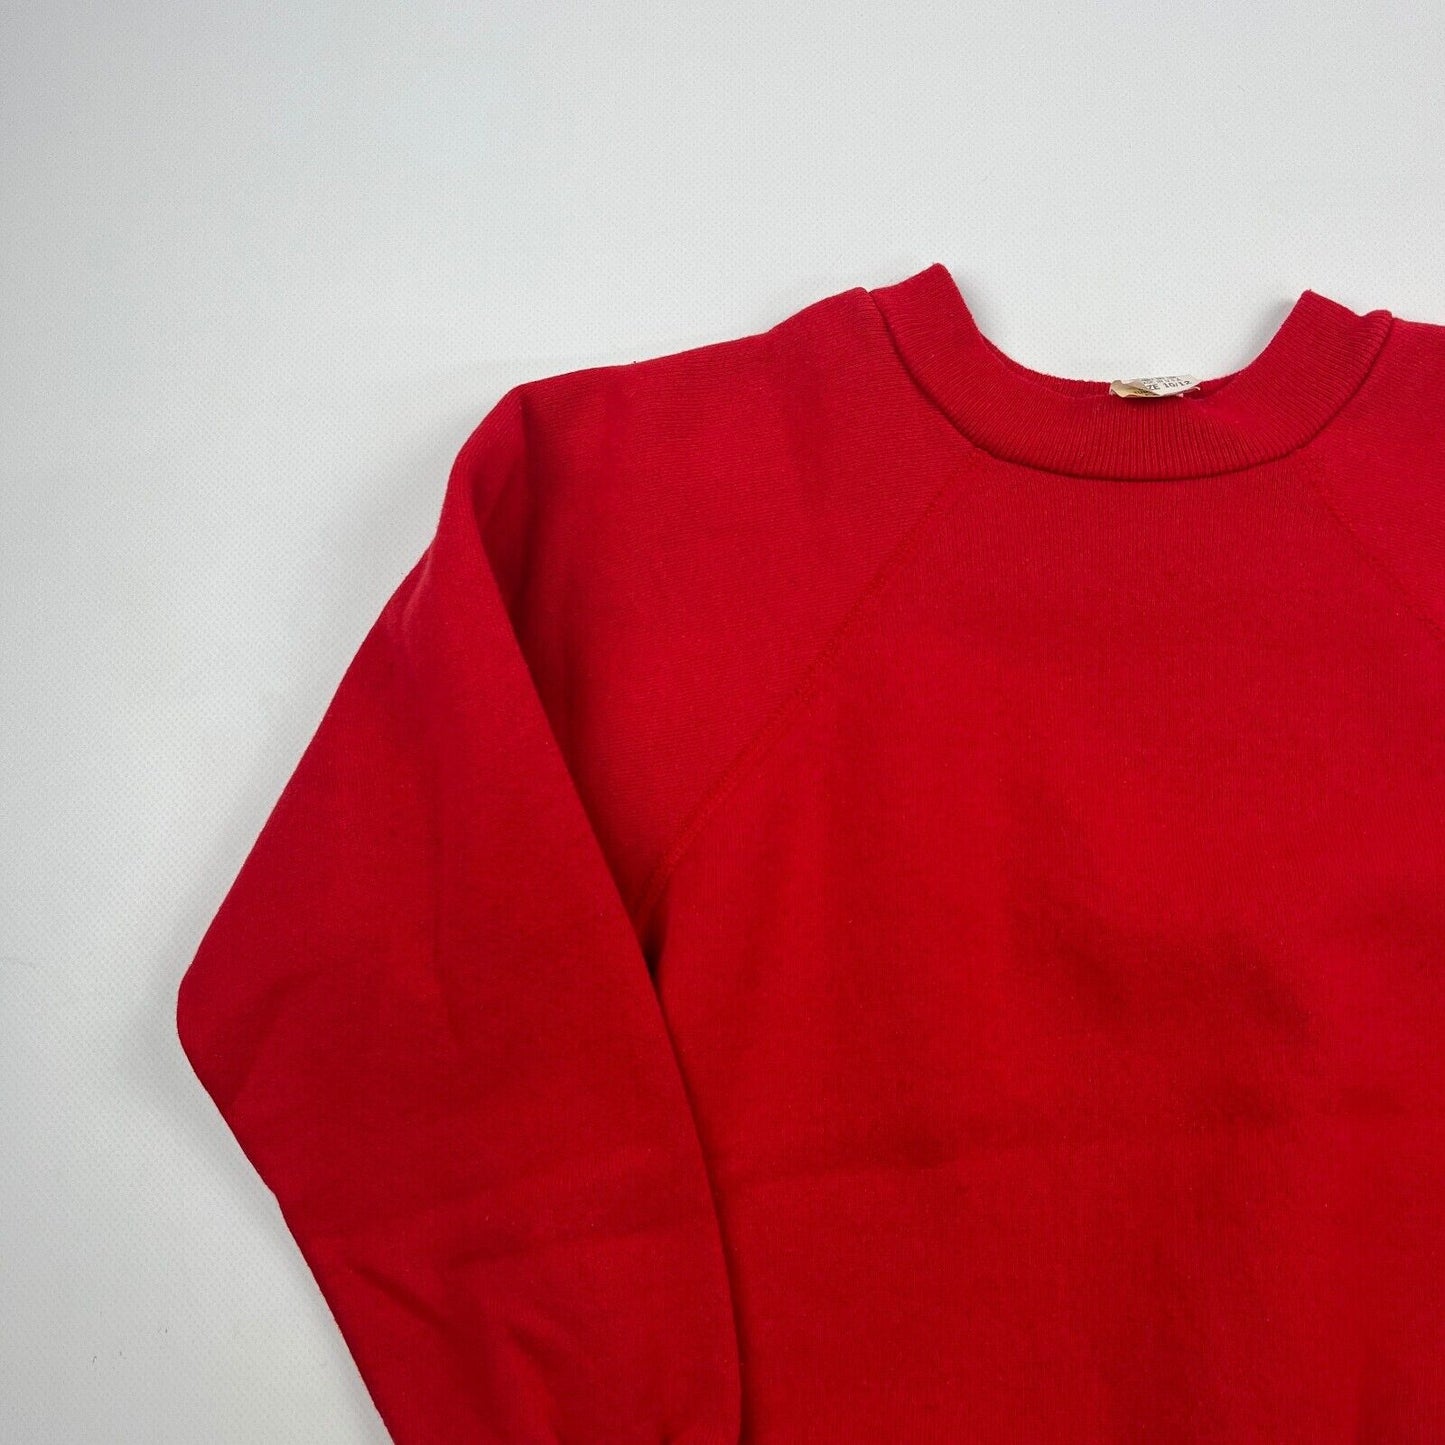 VINTAGE 80s Blank Red Raglan Crewneck Sweater sz Medium 10-12 Youth